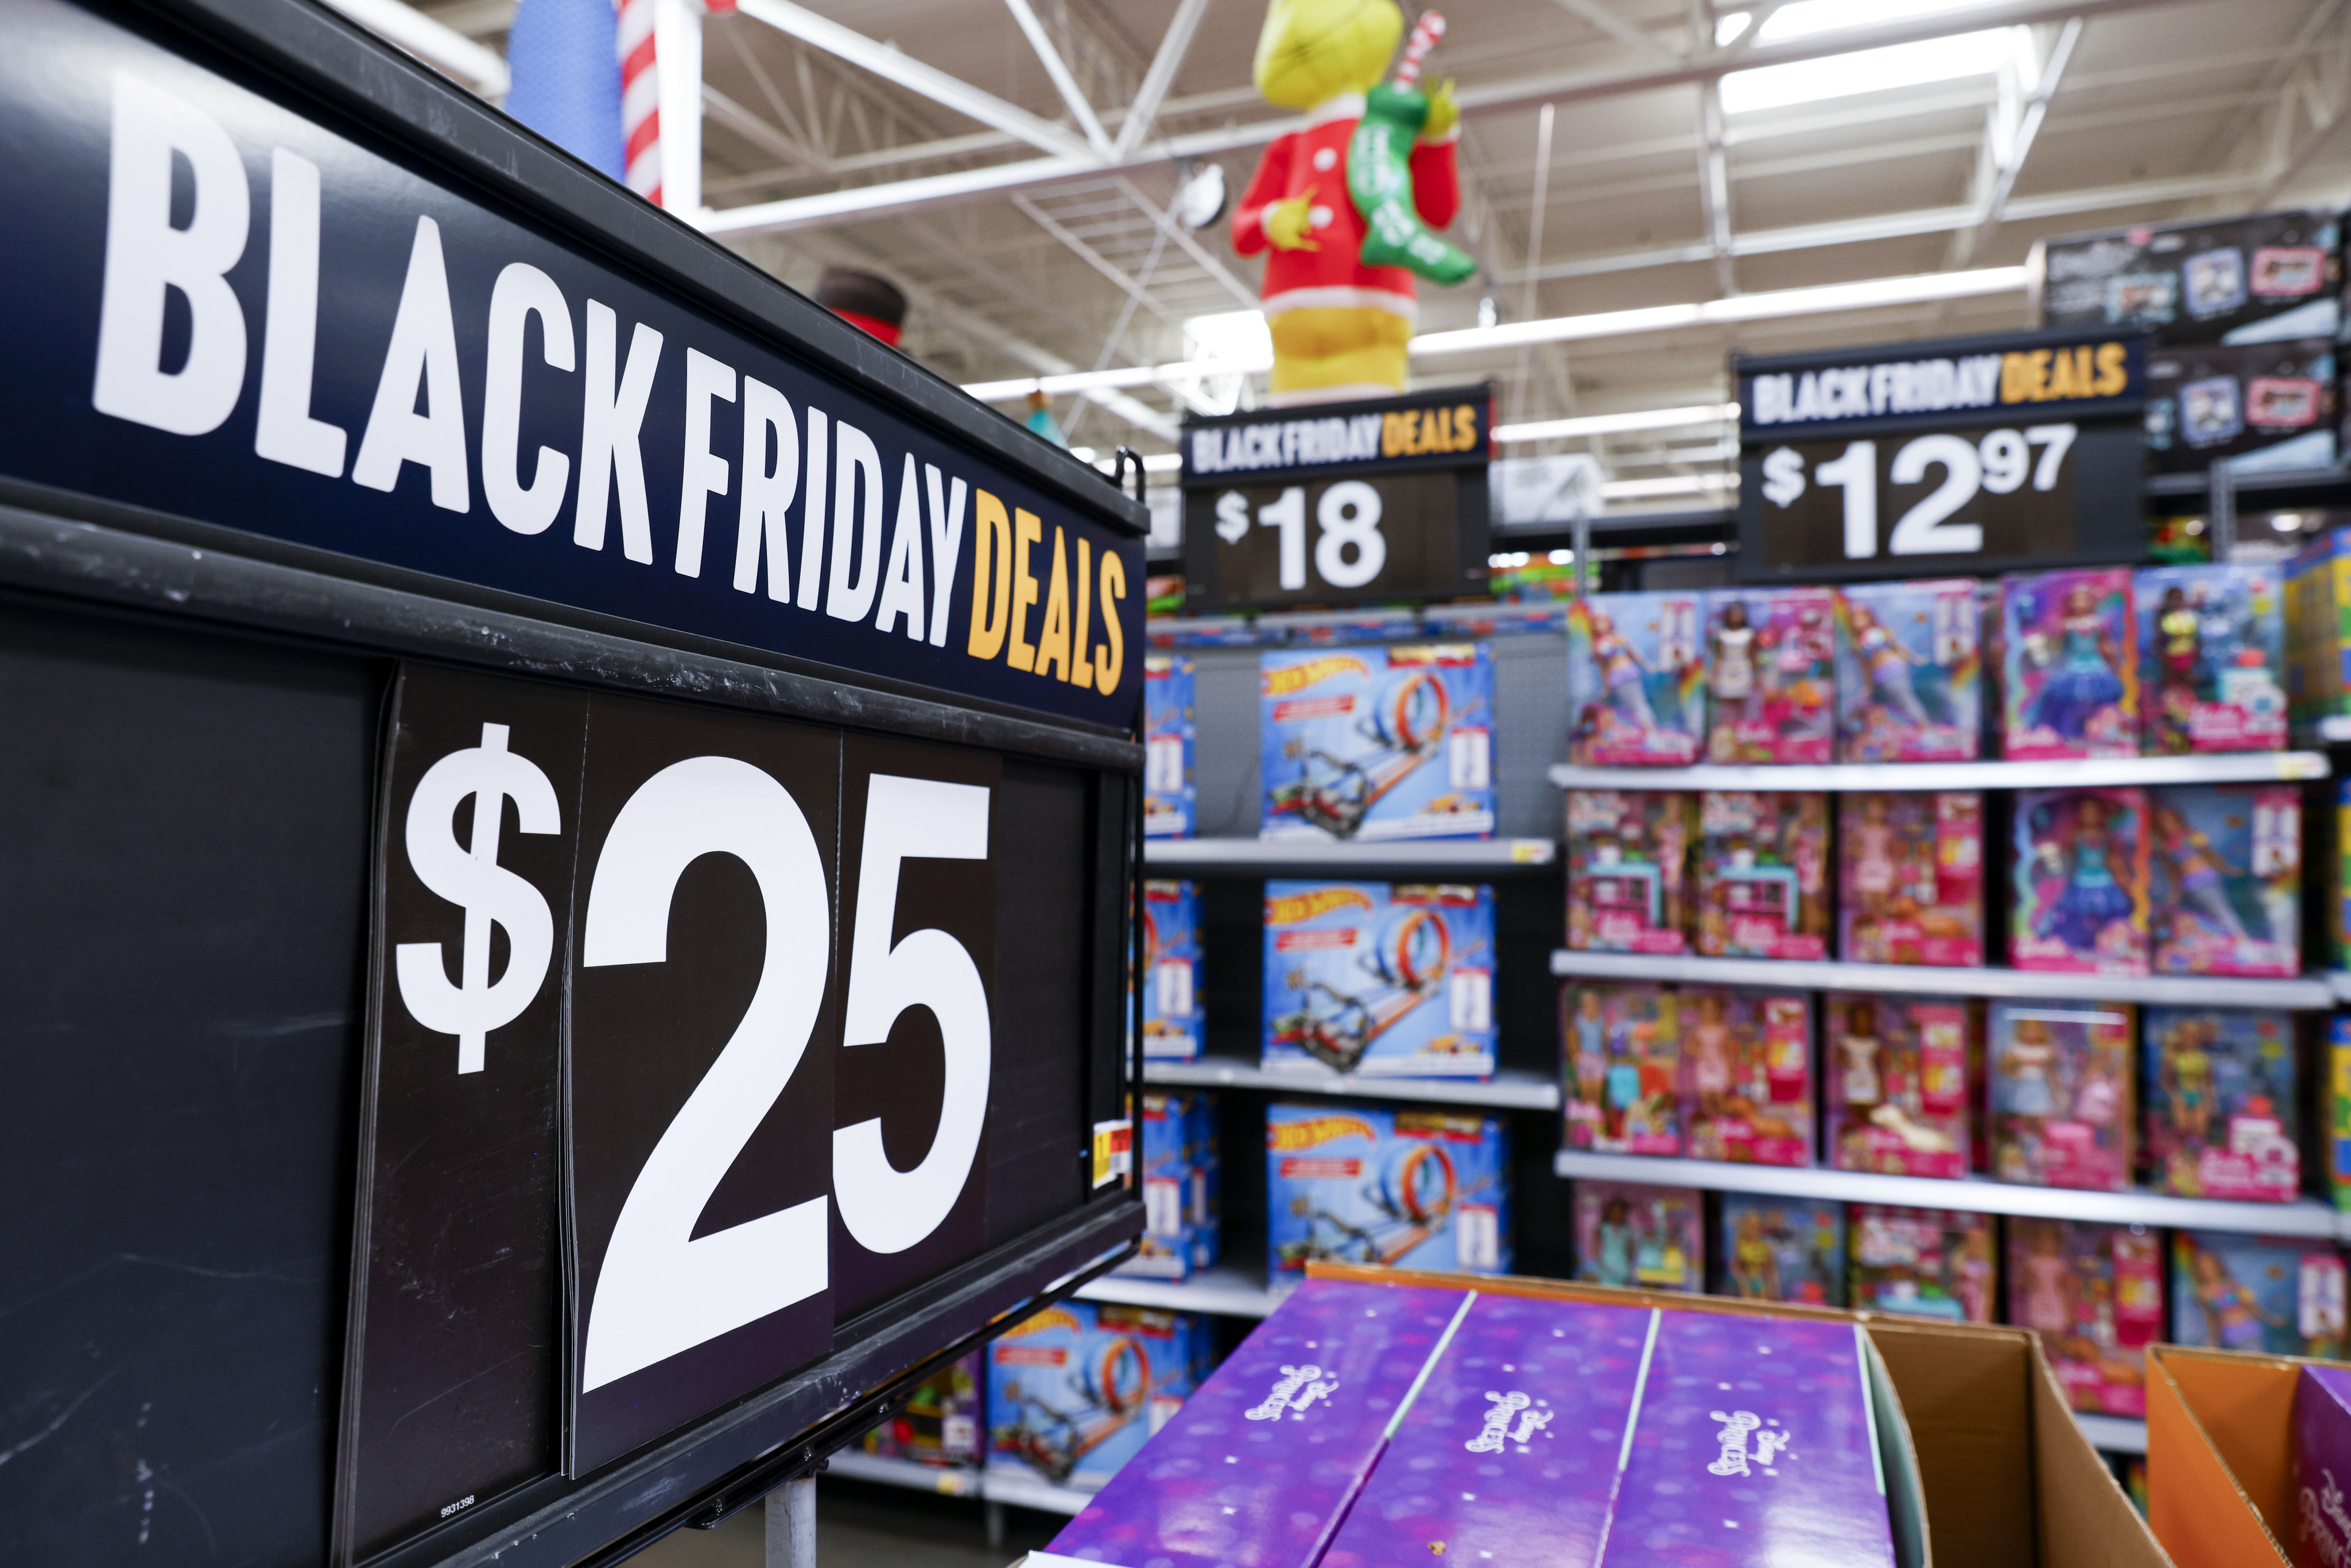 Walmart Black Friday Deals for Days savings event returns November 7